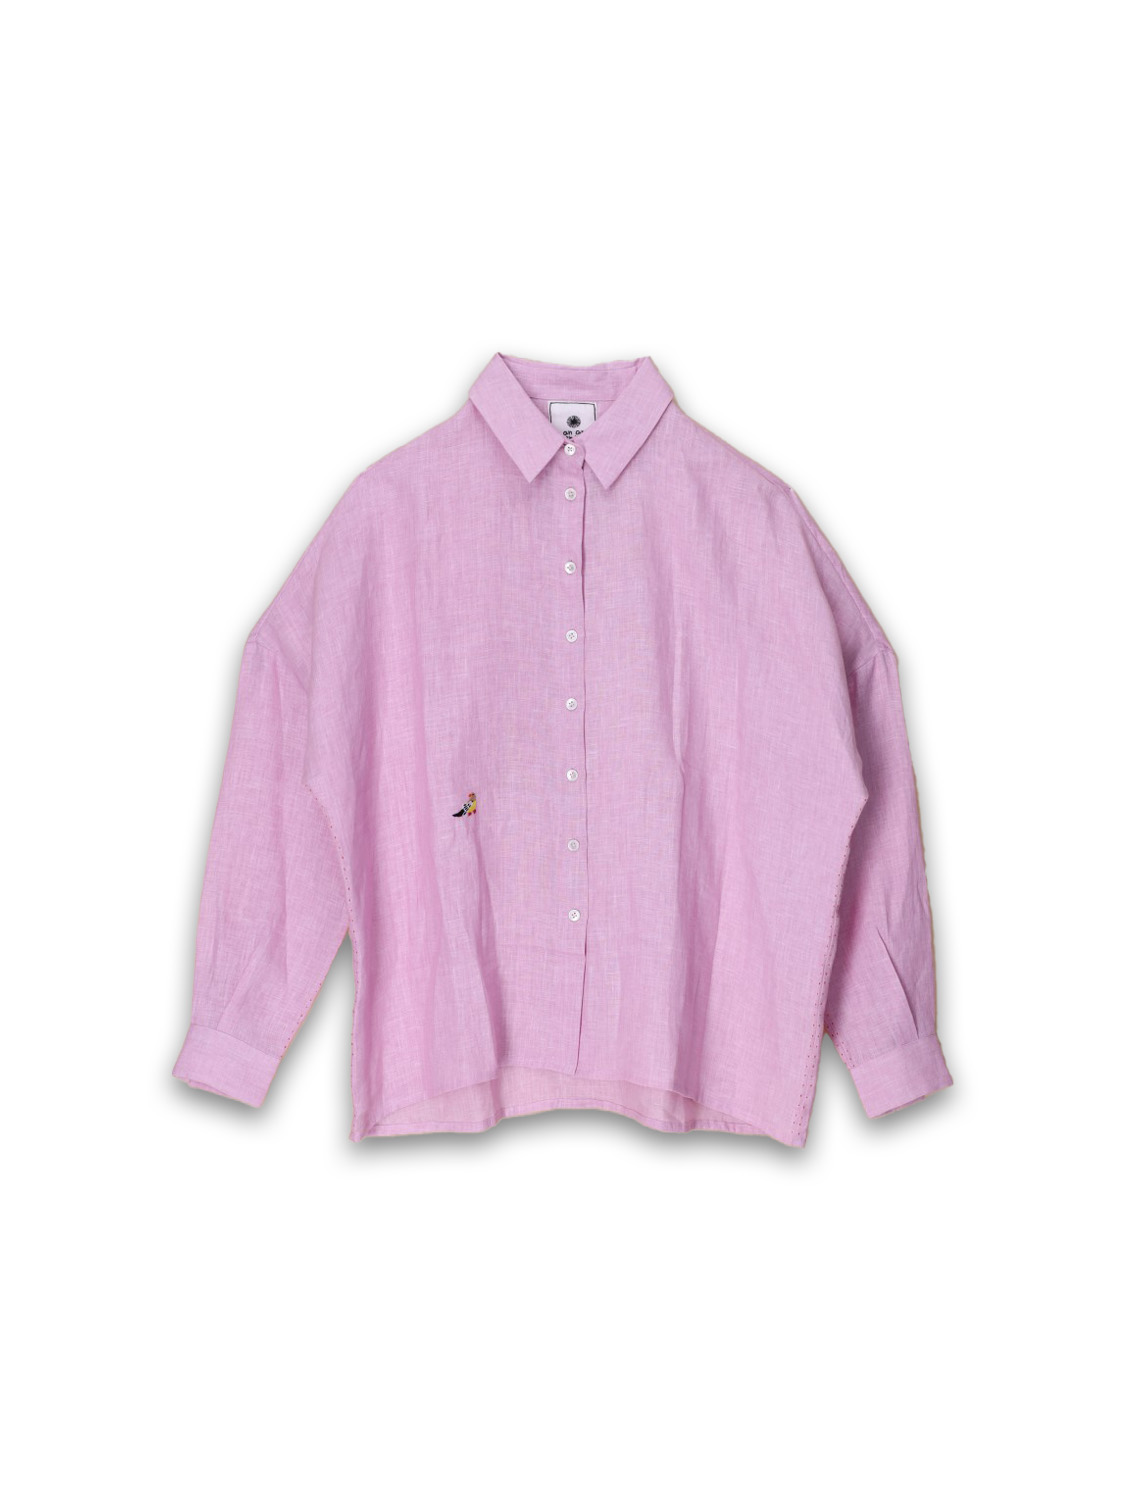 Summer – linen blouse with playful details 